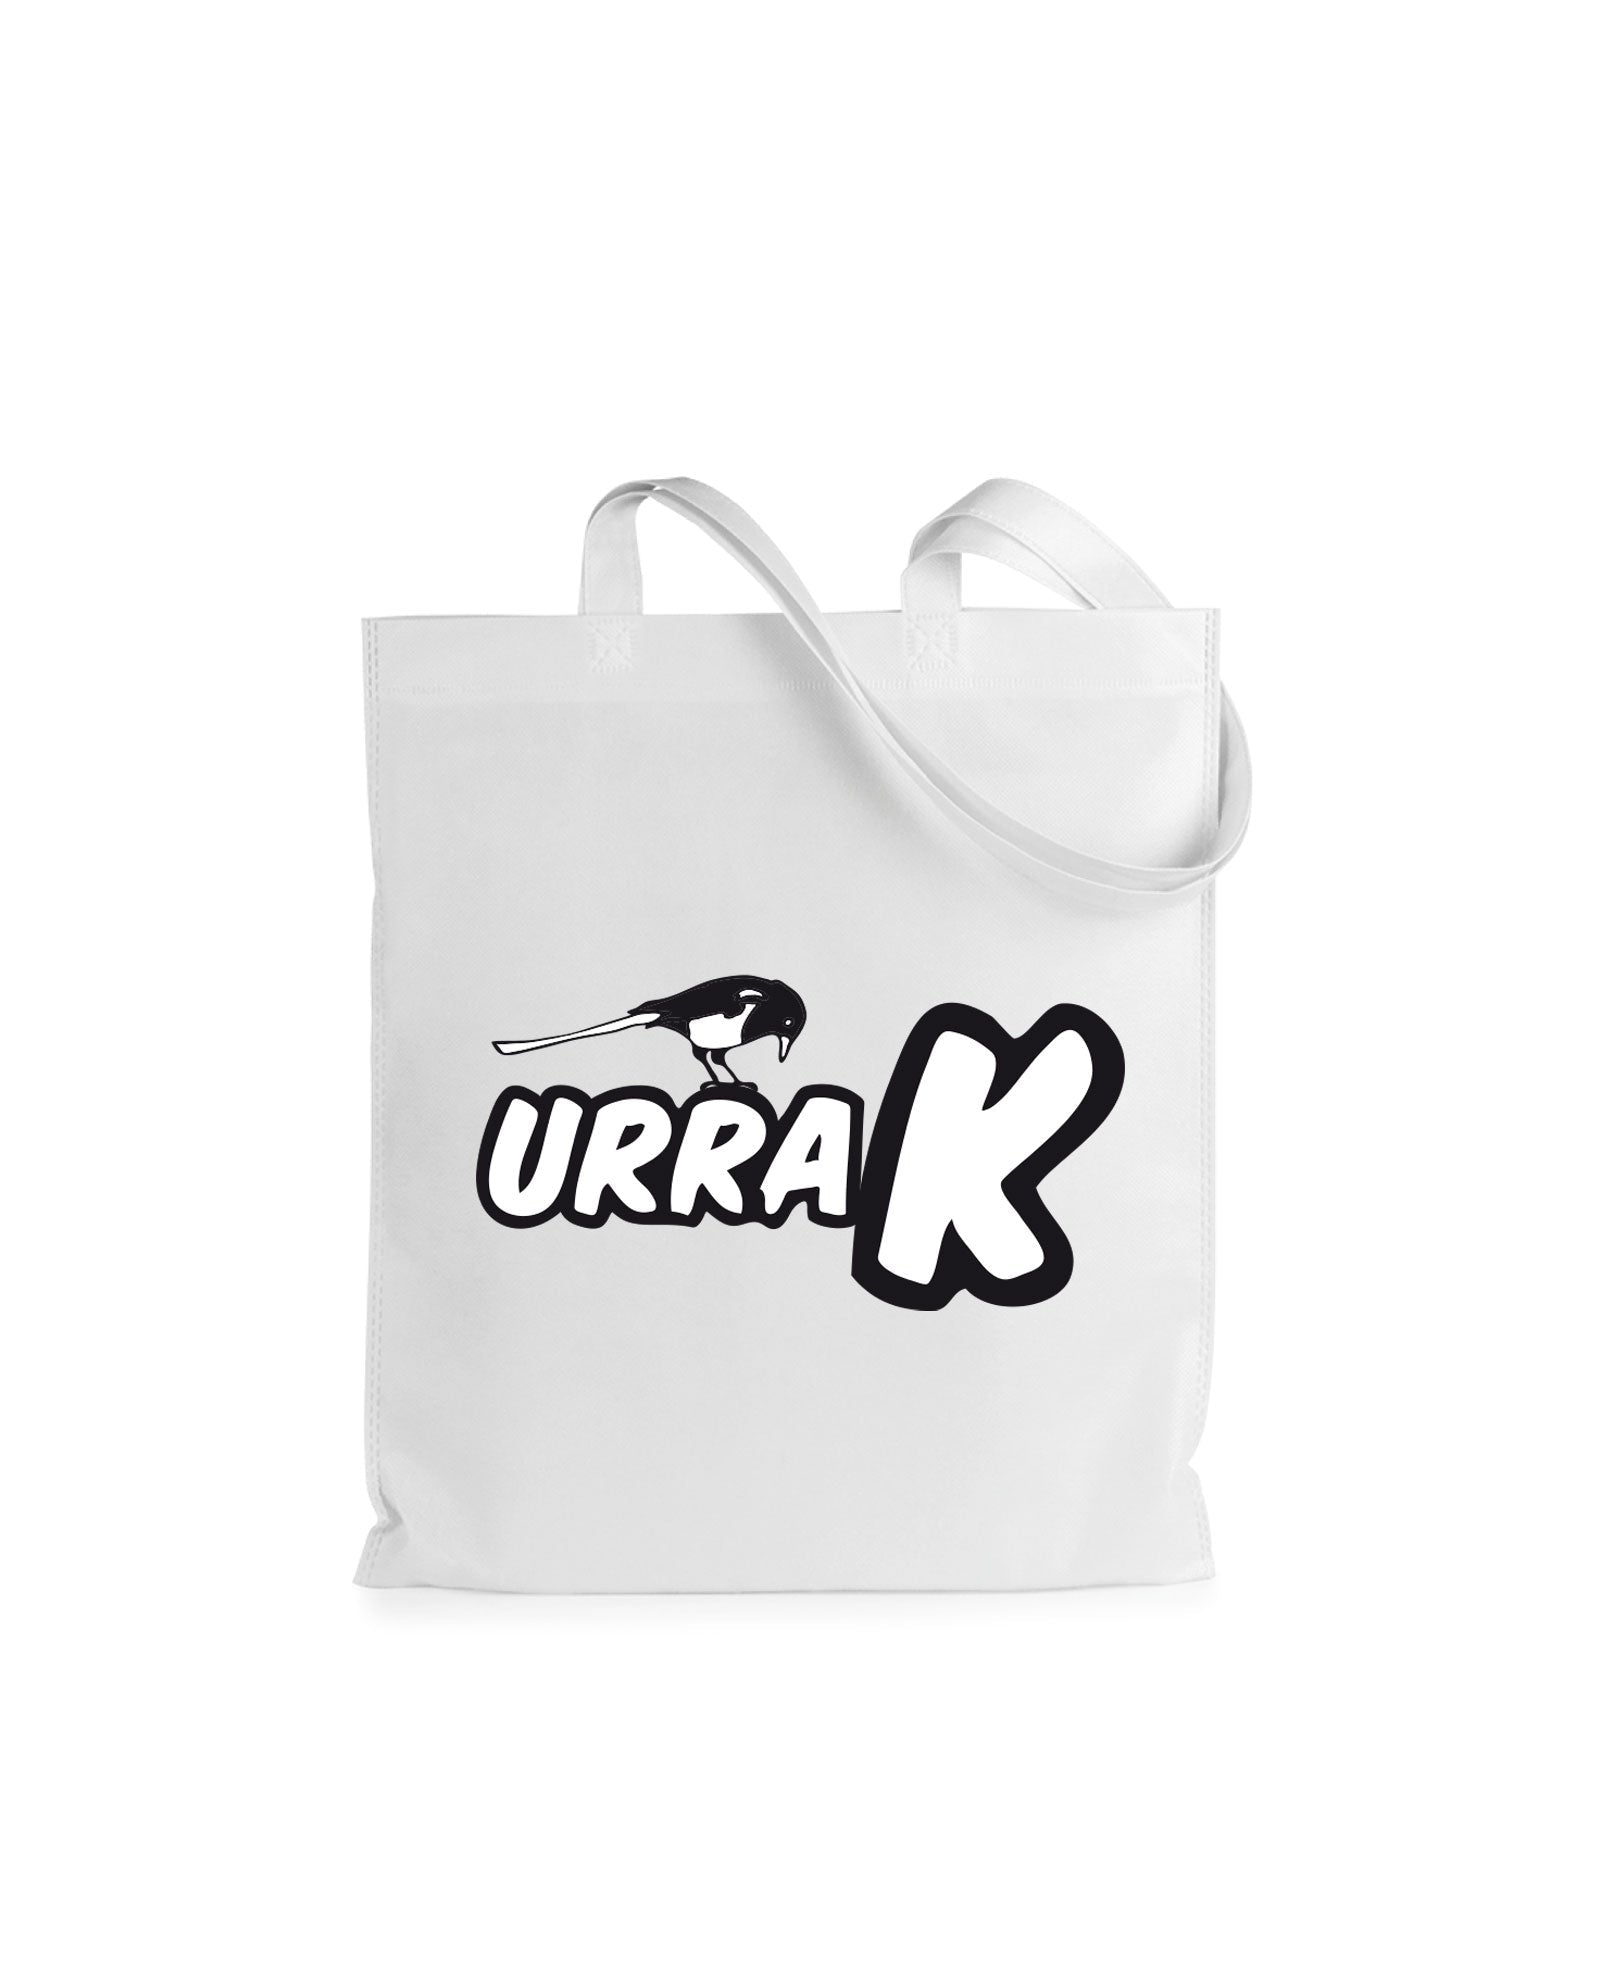 Tote Bag Logo URRAK - blanca - Rocktud - Urrak